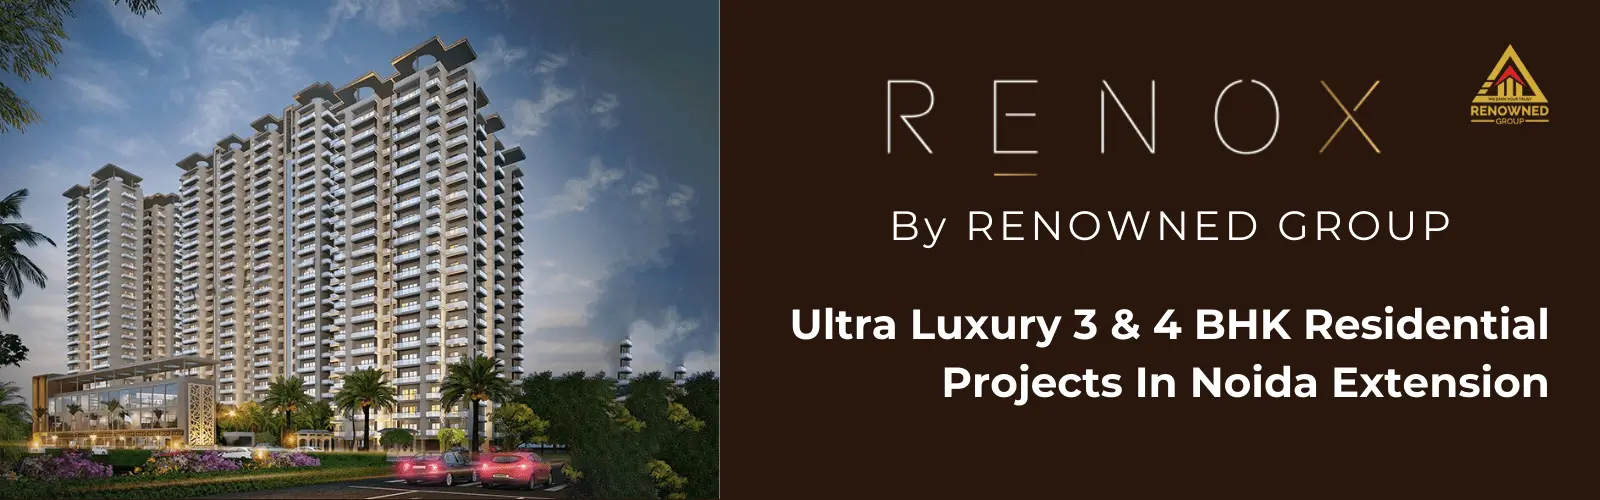 Renowned Renox: Luxury 3/4 BHK Apartment In Noida Extension